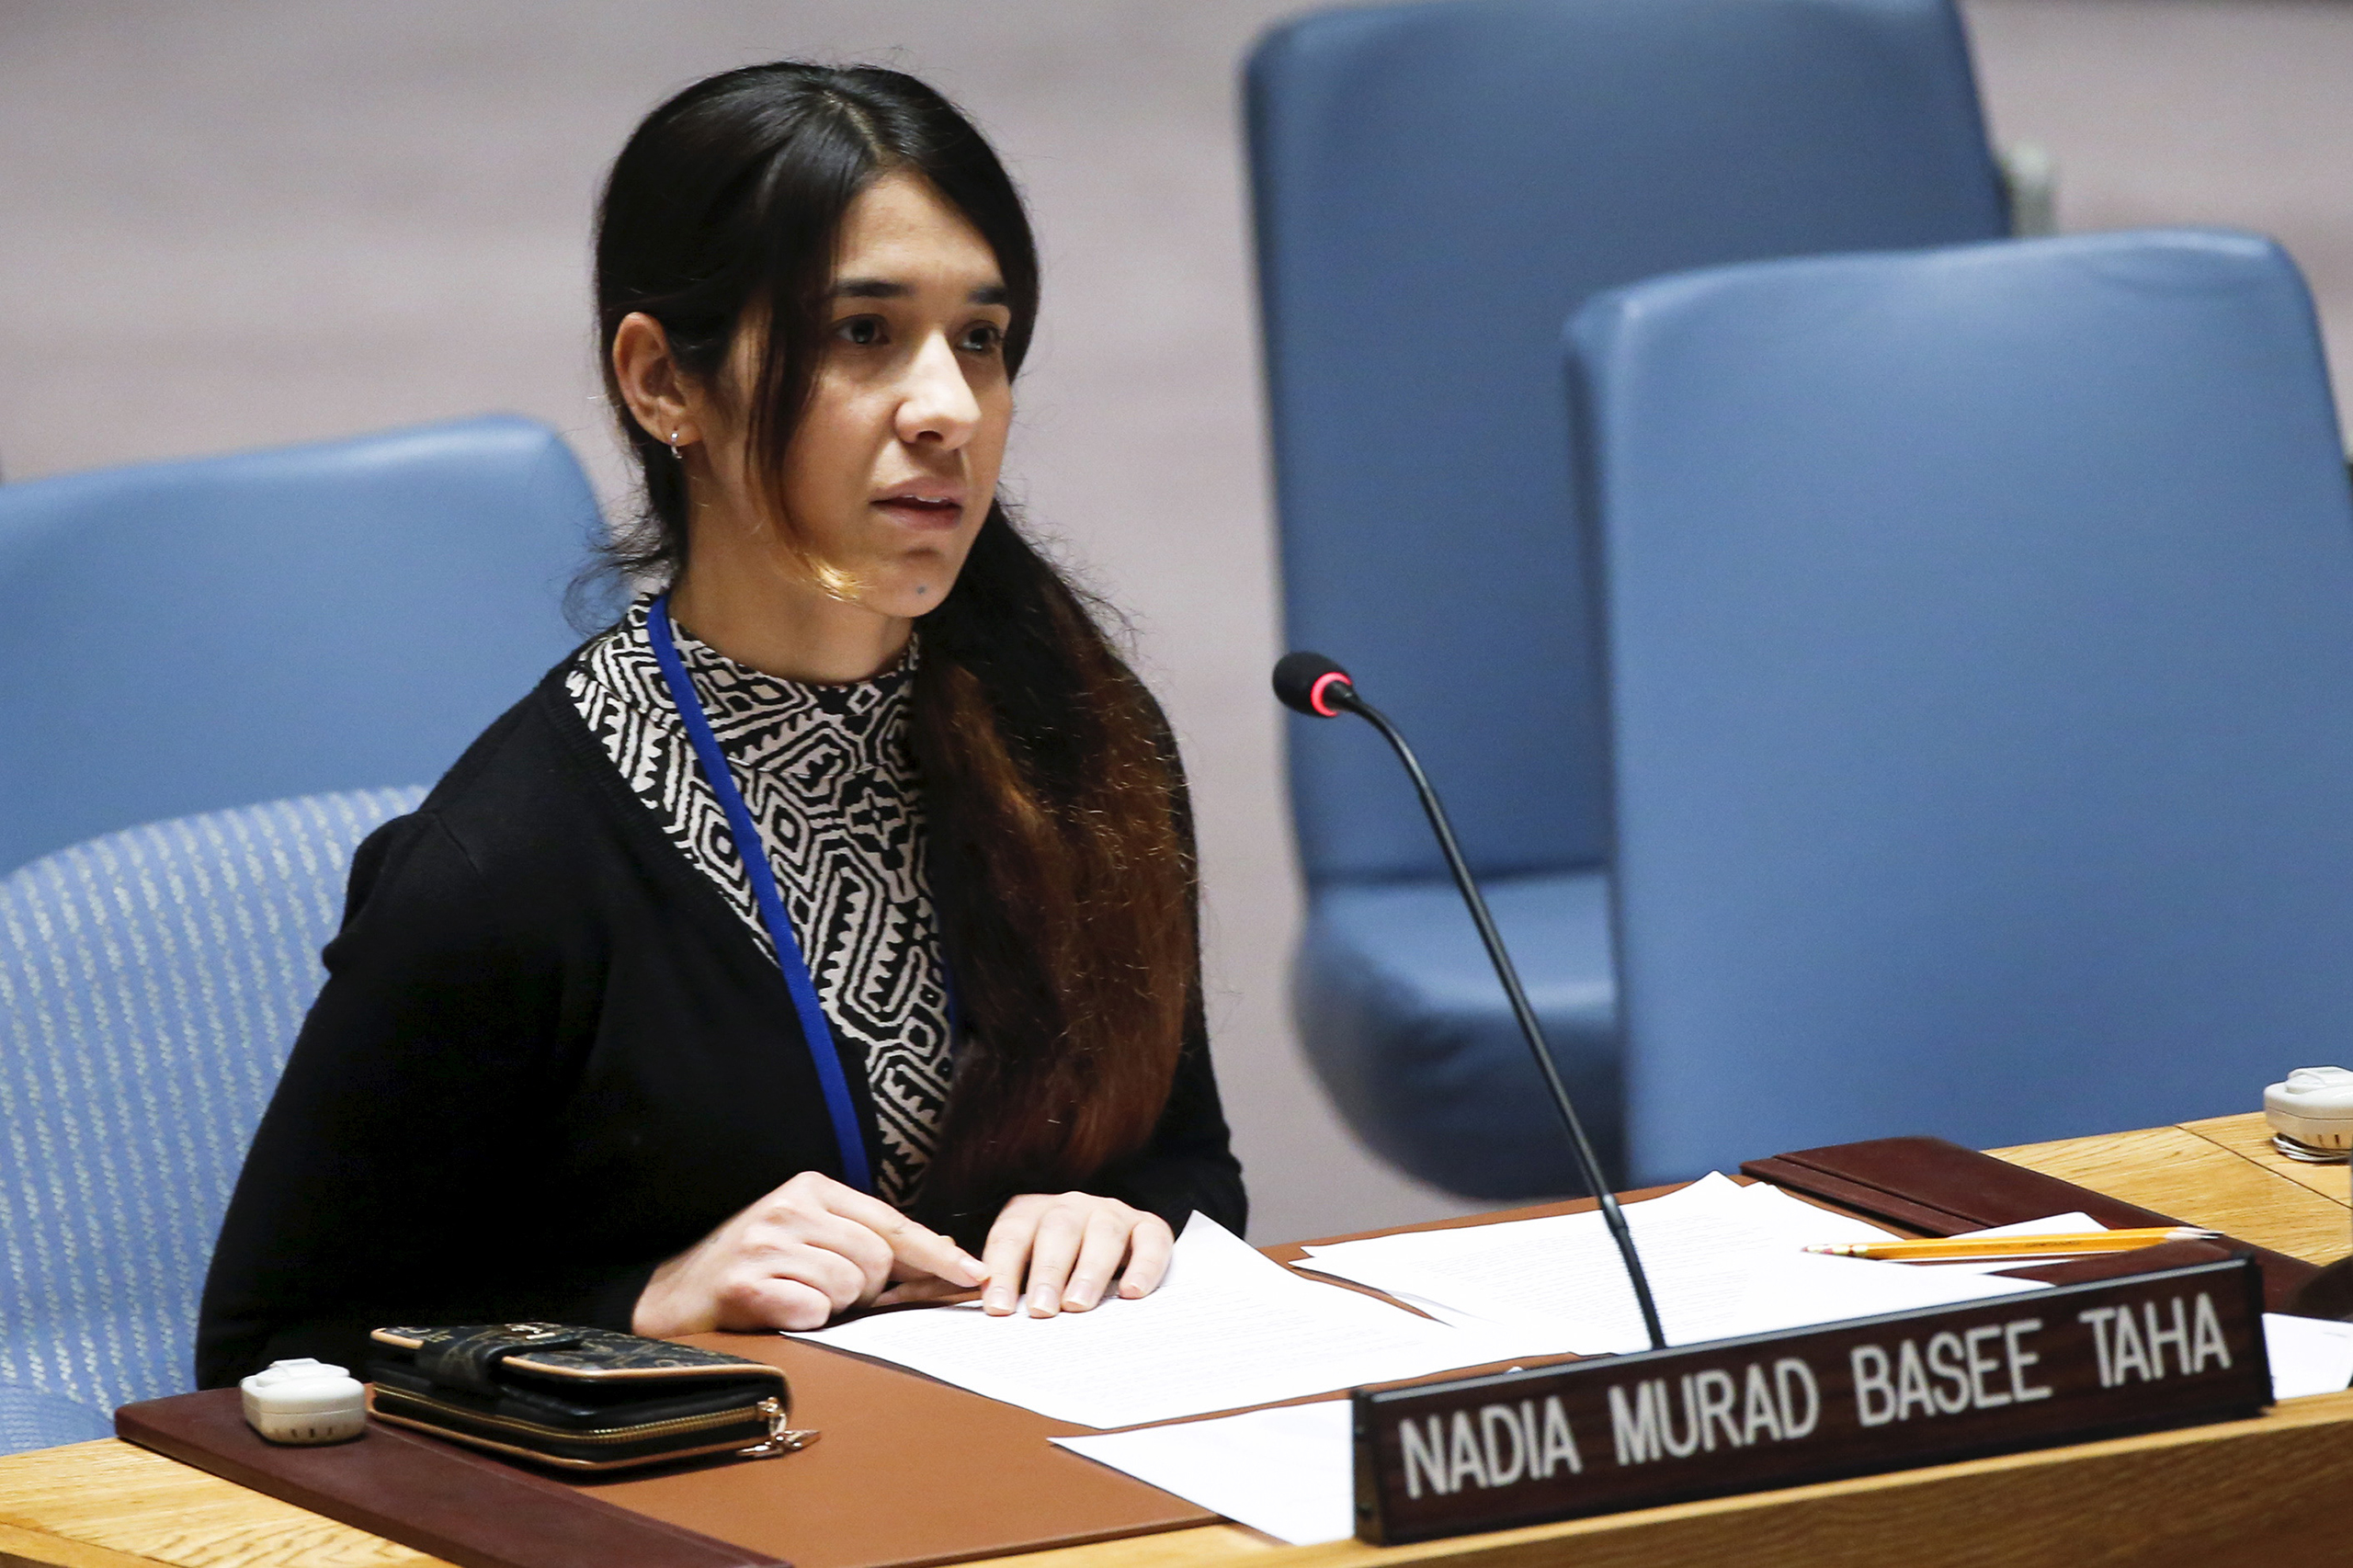 Nadia Murad Basee Taha, a 21-year-old Iraqi woman of the Yezidi minority, speaks to members of the U.N. Security Council at the U.N. headquarters in New York City on Dec. 16, 2015 (Eduardo Munoz—Reuters)